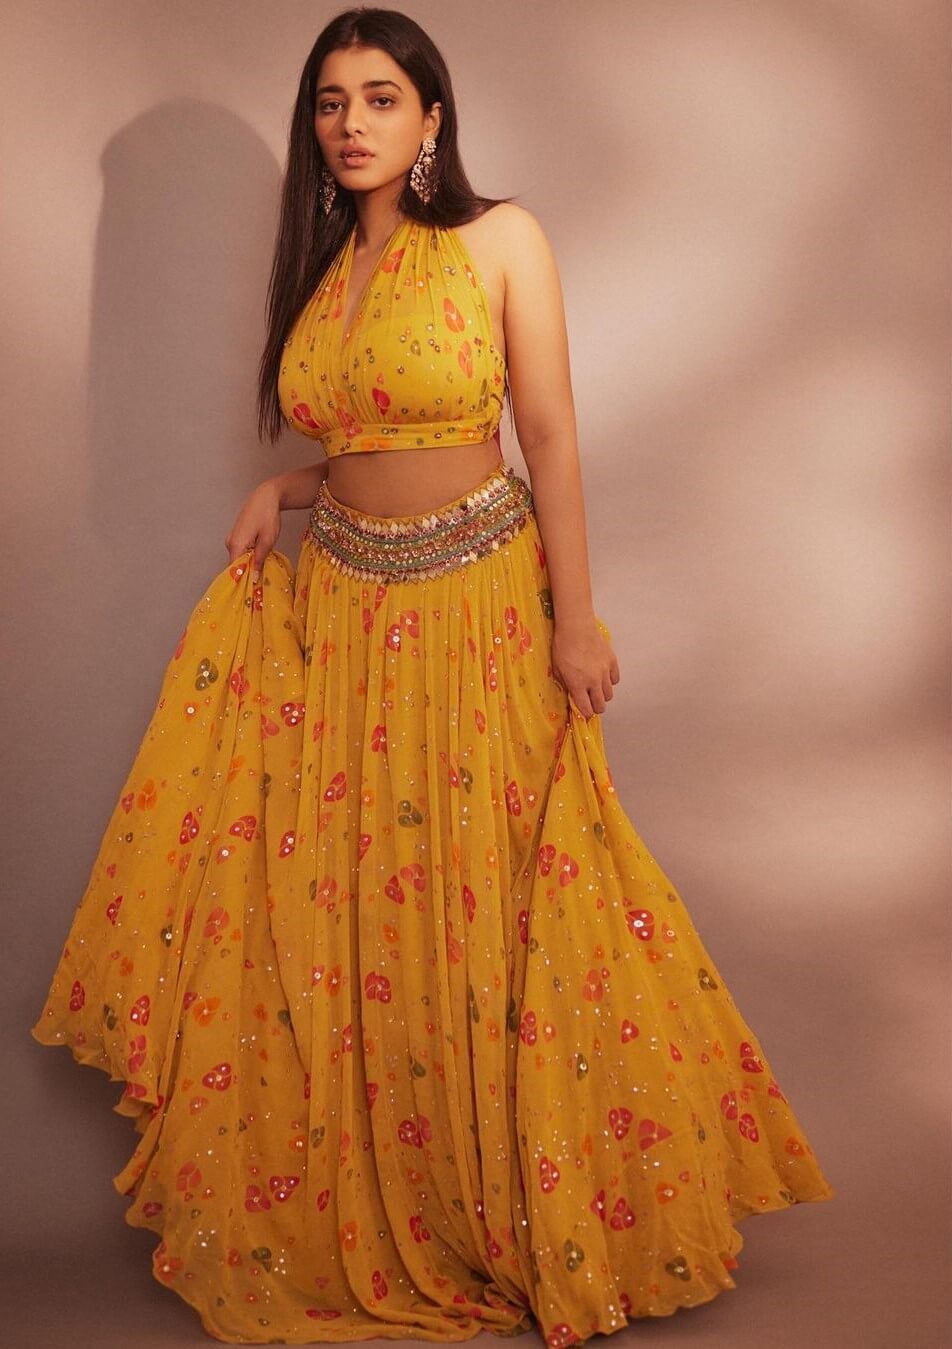 Ketika Sharma In Fabulous Yellow Lehenga Outfit Ketika Sharma Classy and Sassy Outfit Looks